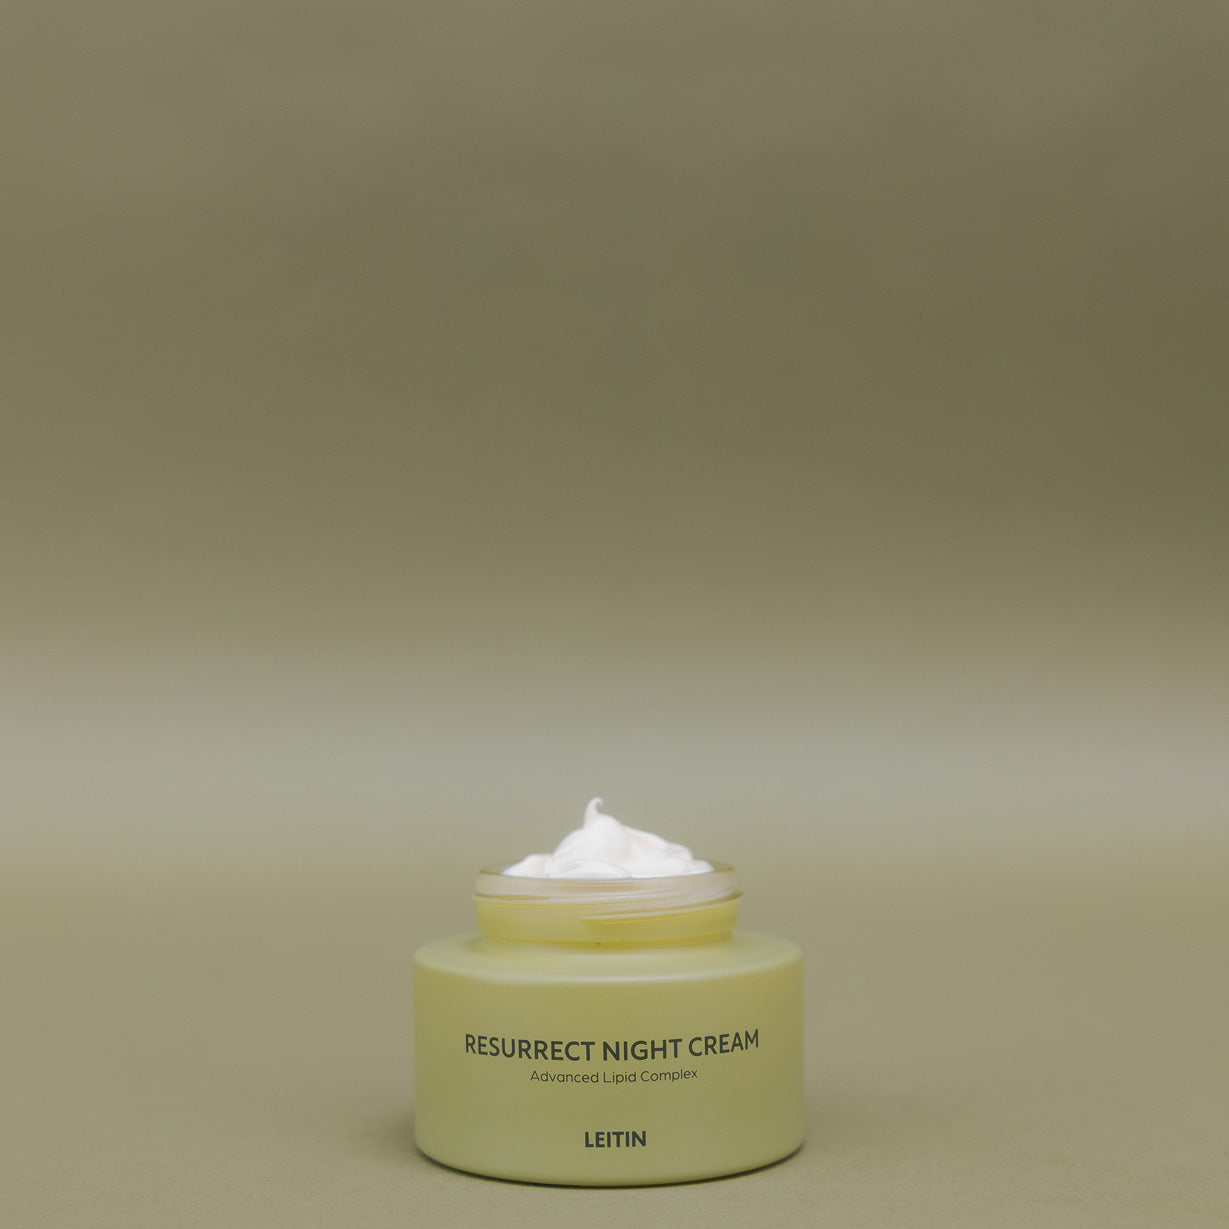 Image of LEITIN Skincare's Resurrect Night Cream Showing Cream